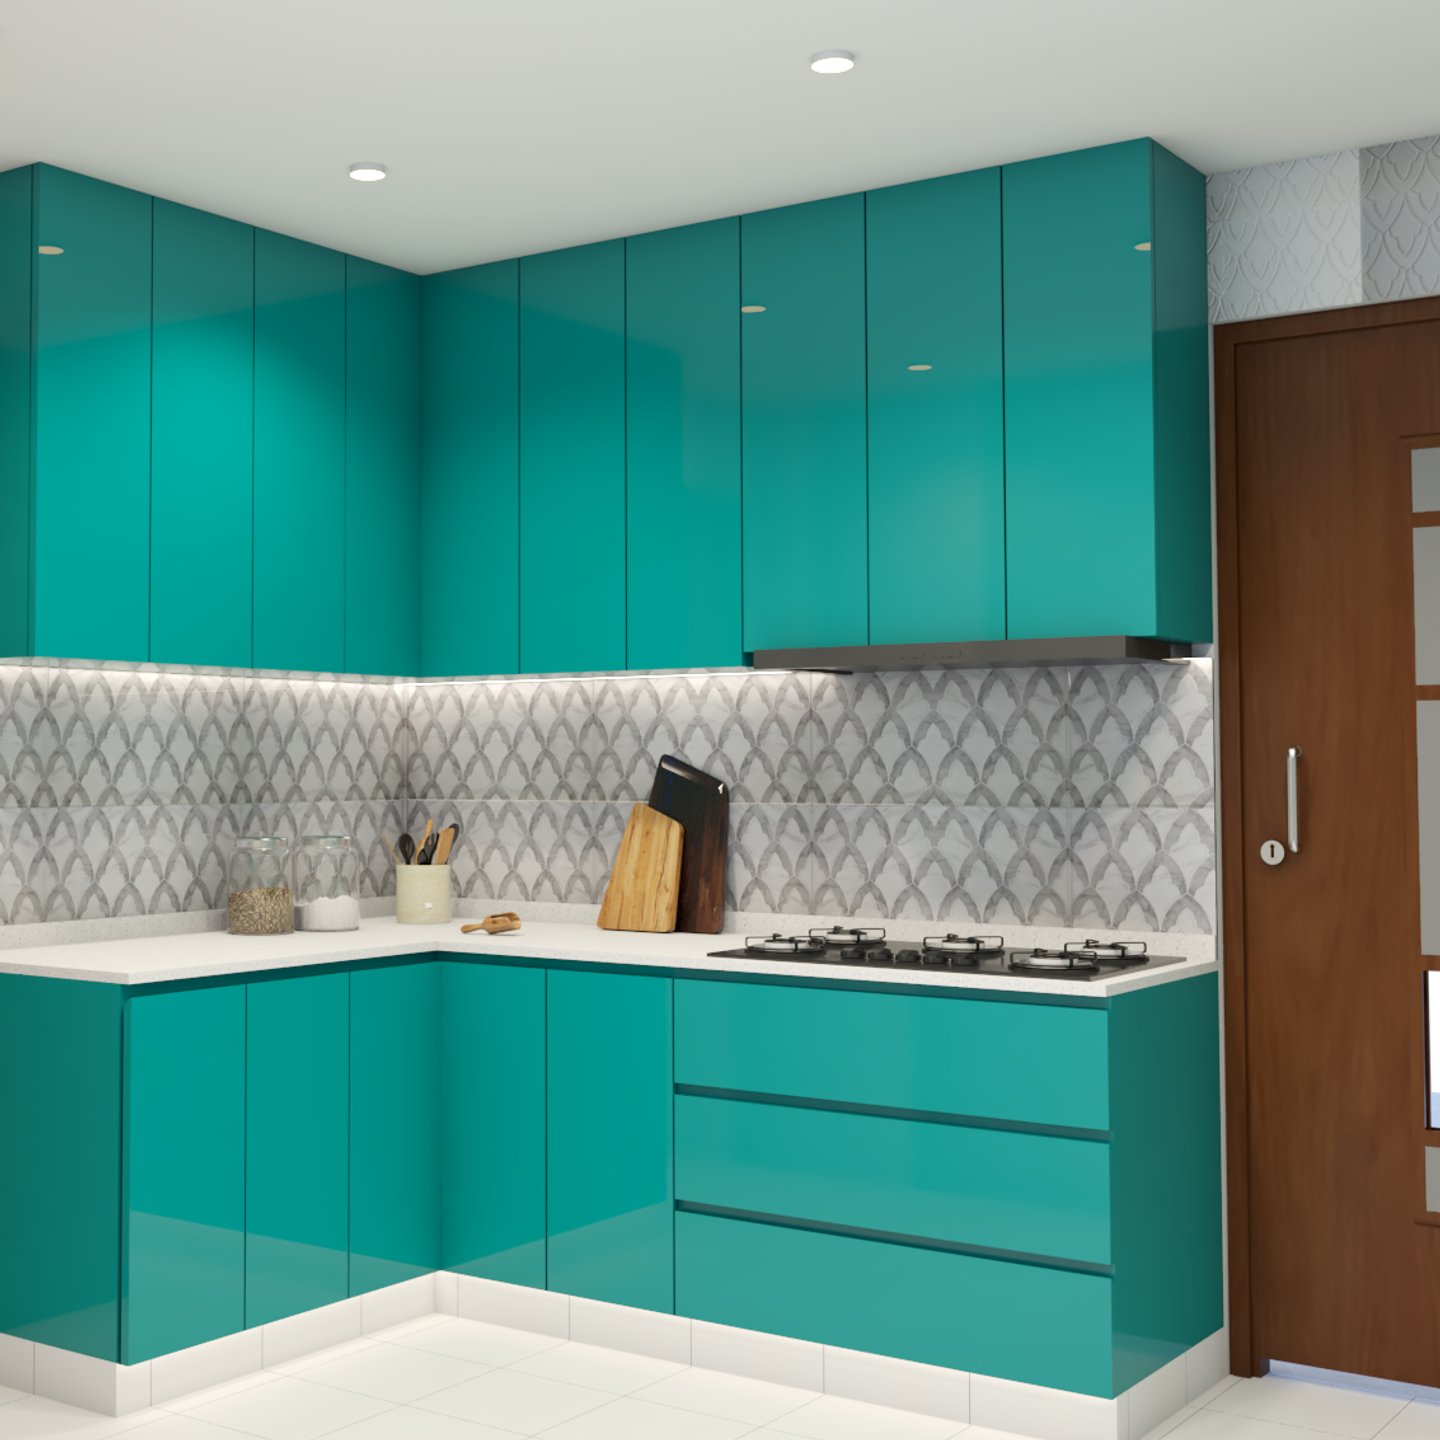 Contemporary Kitchen Cabinet Design In Green | Livspace